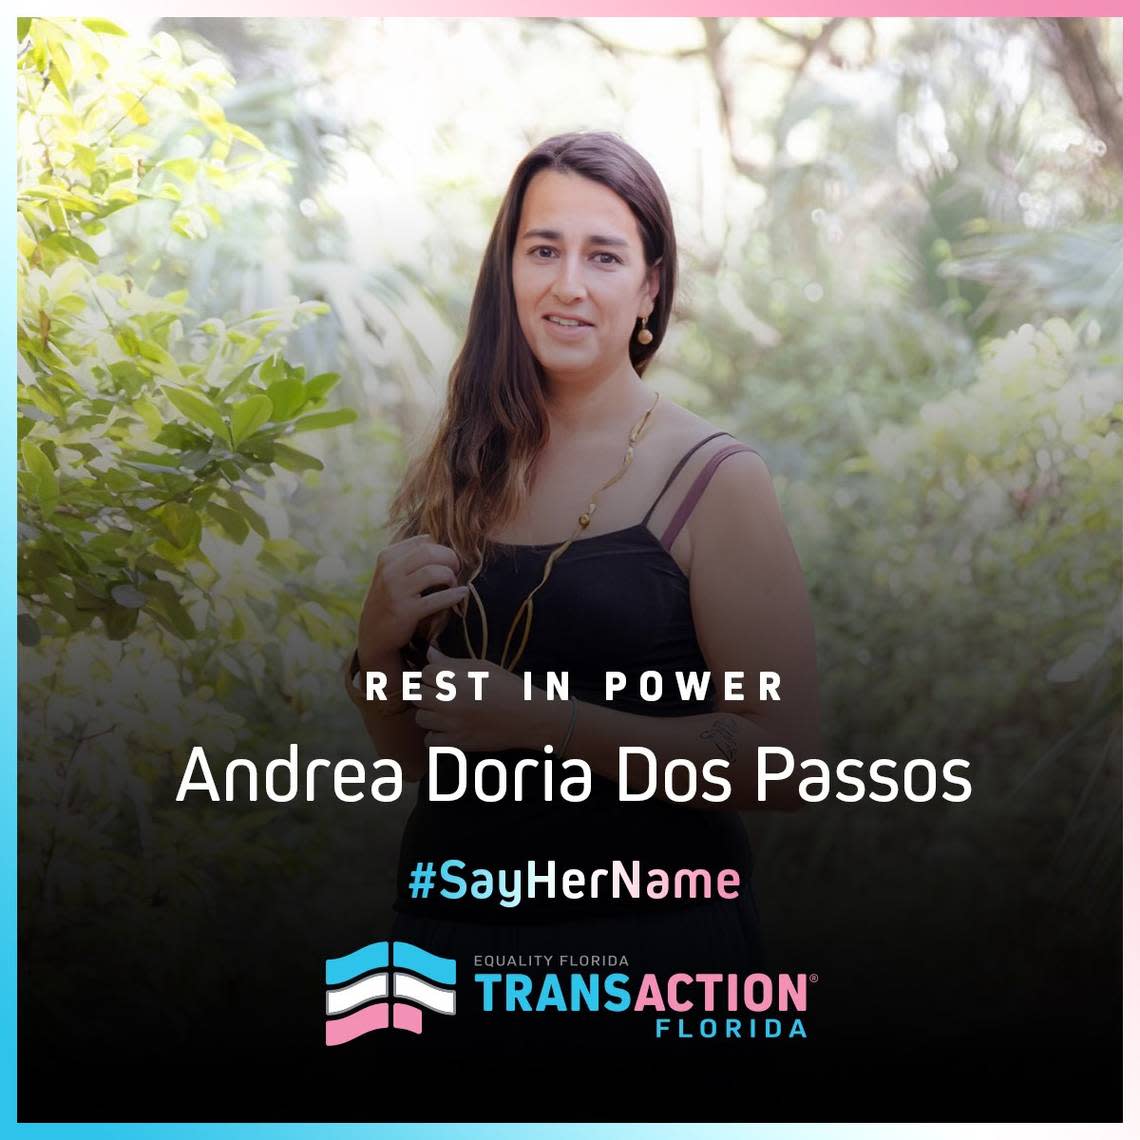 A photo of Andrea Doria Dos Passos, who was killed in Miami Beach on Tuesday.